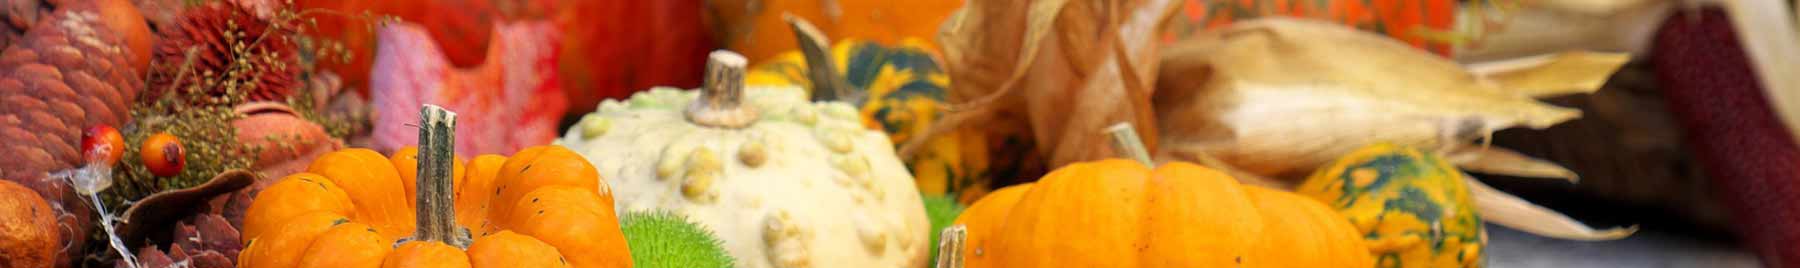 Autumn pumpkins, squash and pinecones